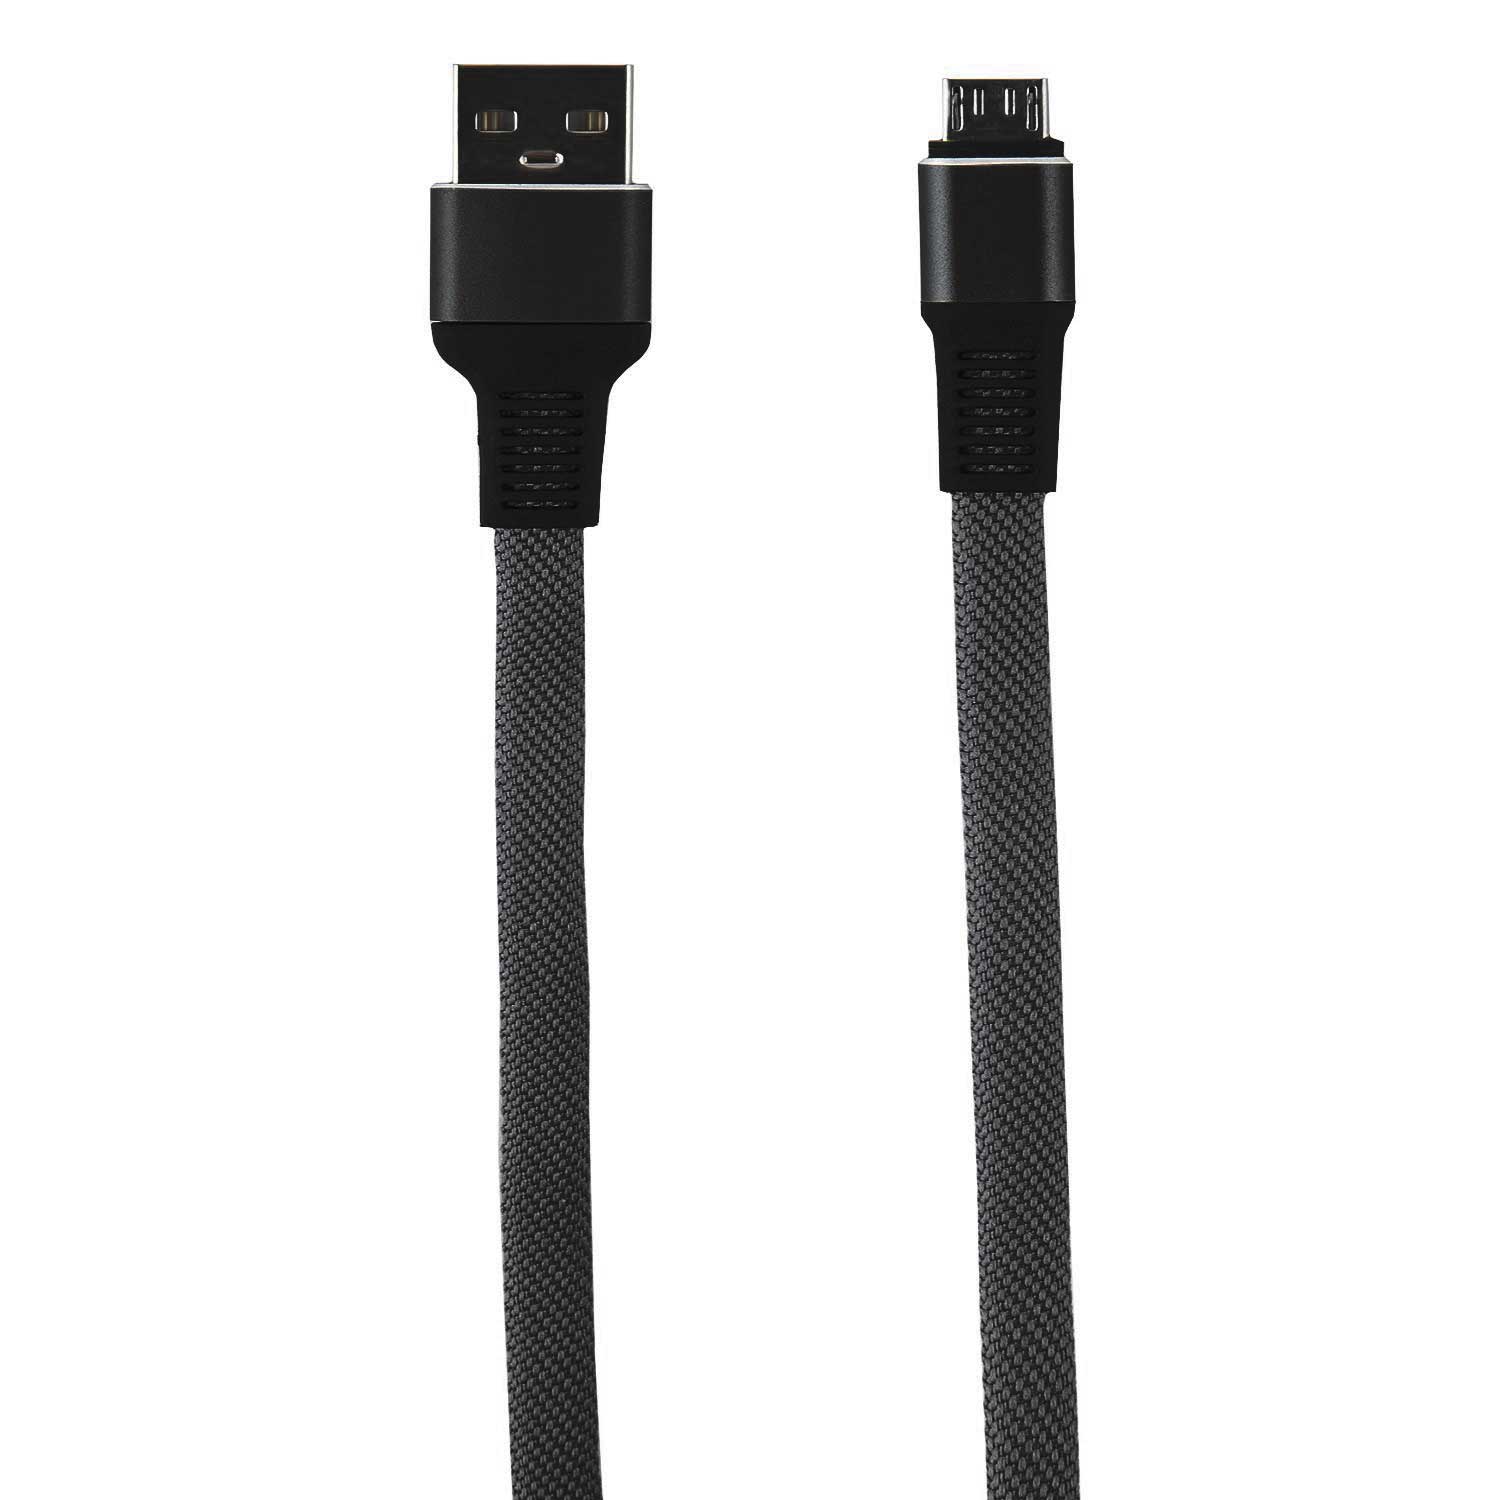 Дата-Кабель Red Line Flat USB - Micro USB, черный УТ000029897 цена и фото